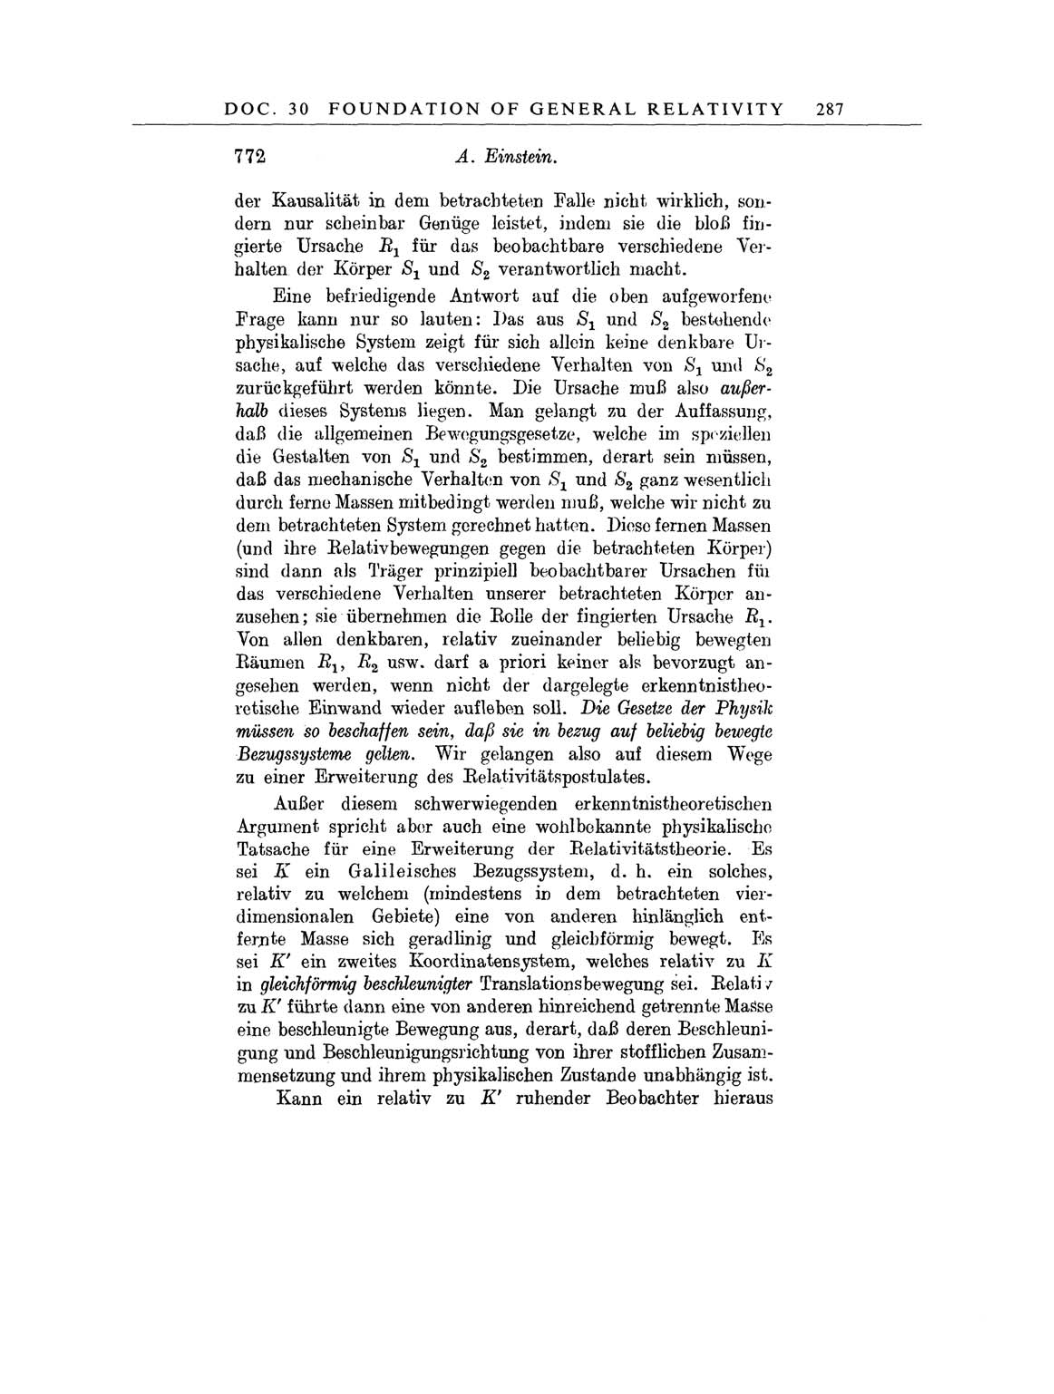 Volume 6: The Berlin Years: Writings, 1914-1917 page 287